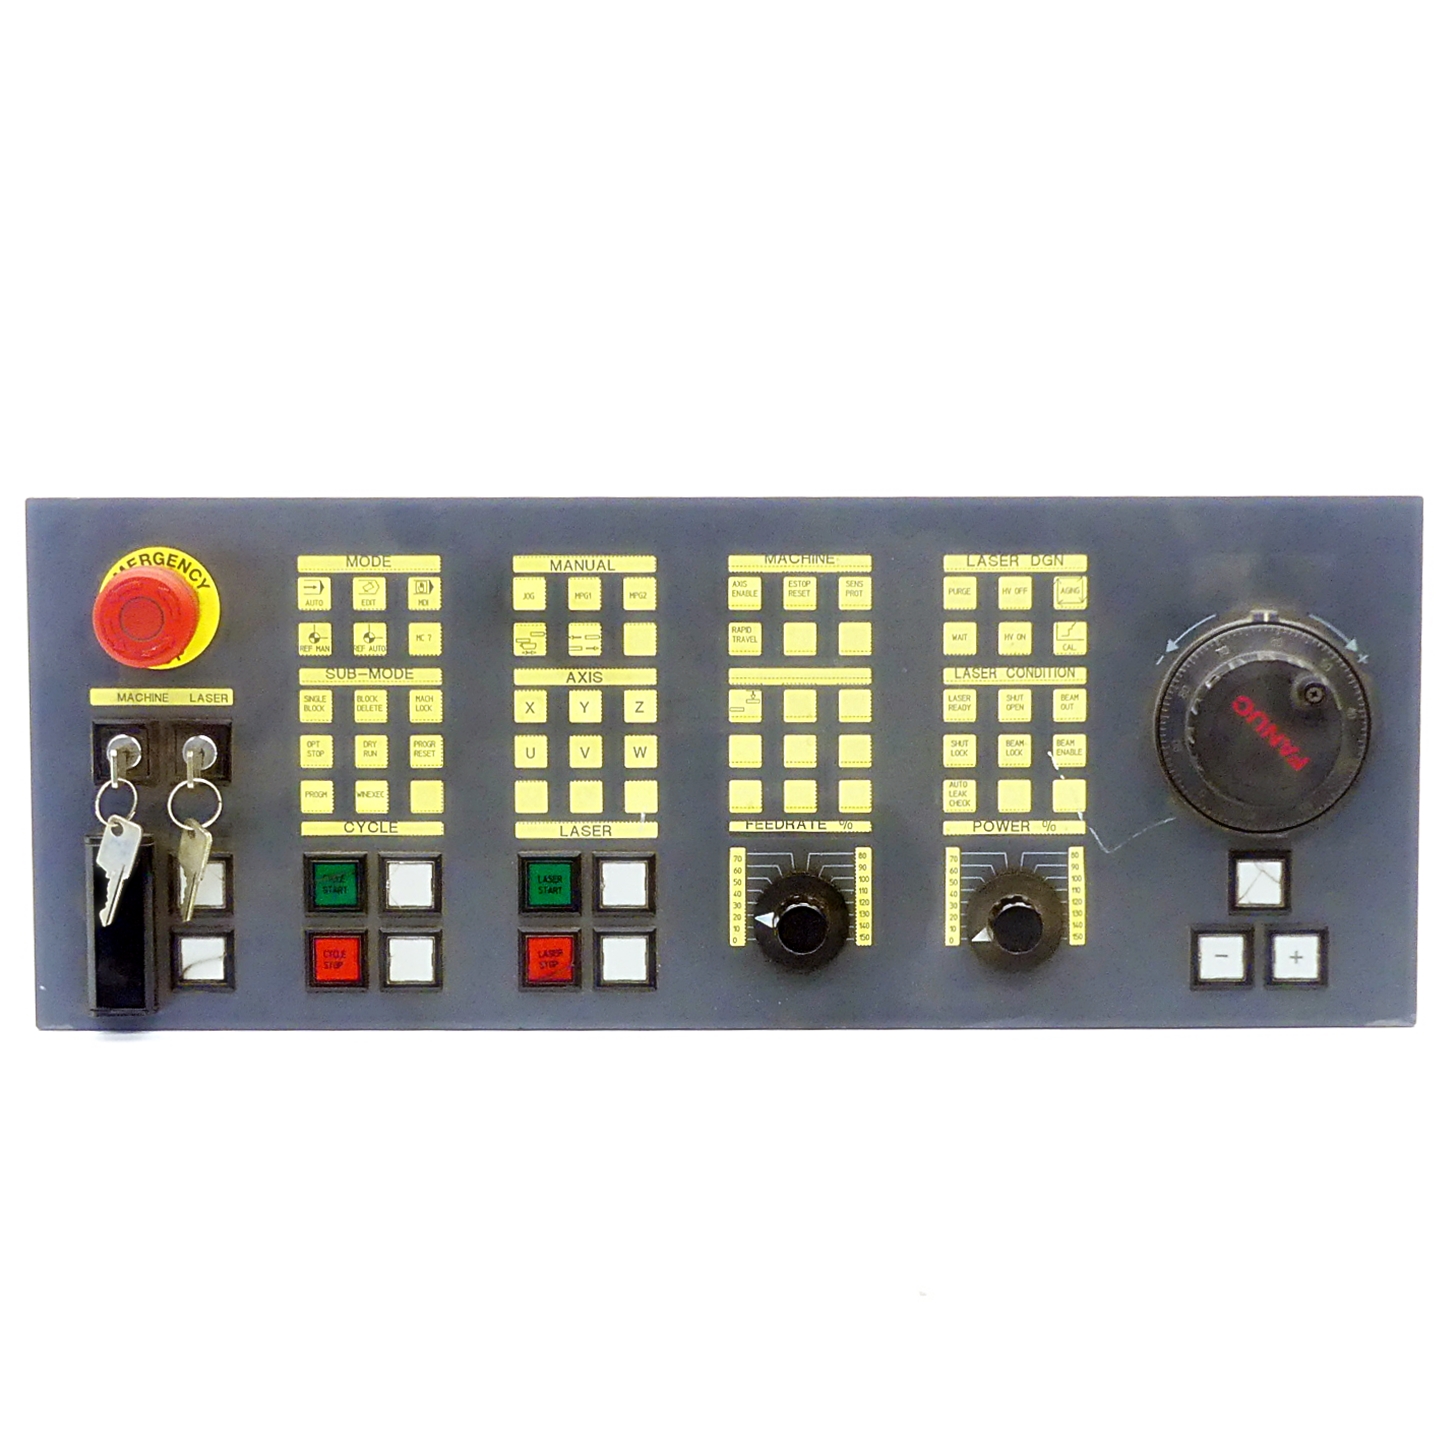 Control panel 